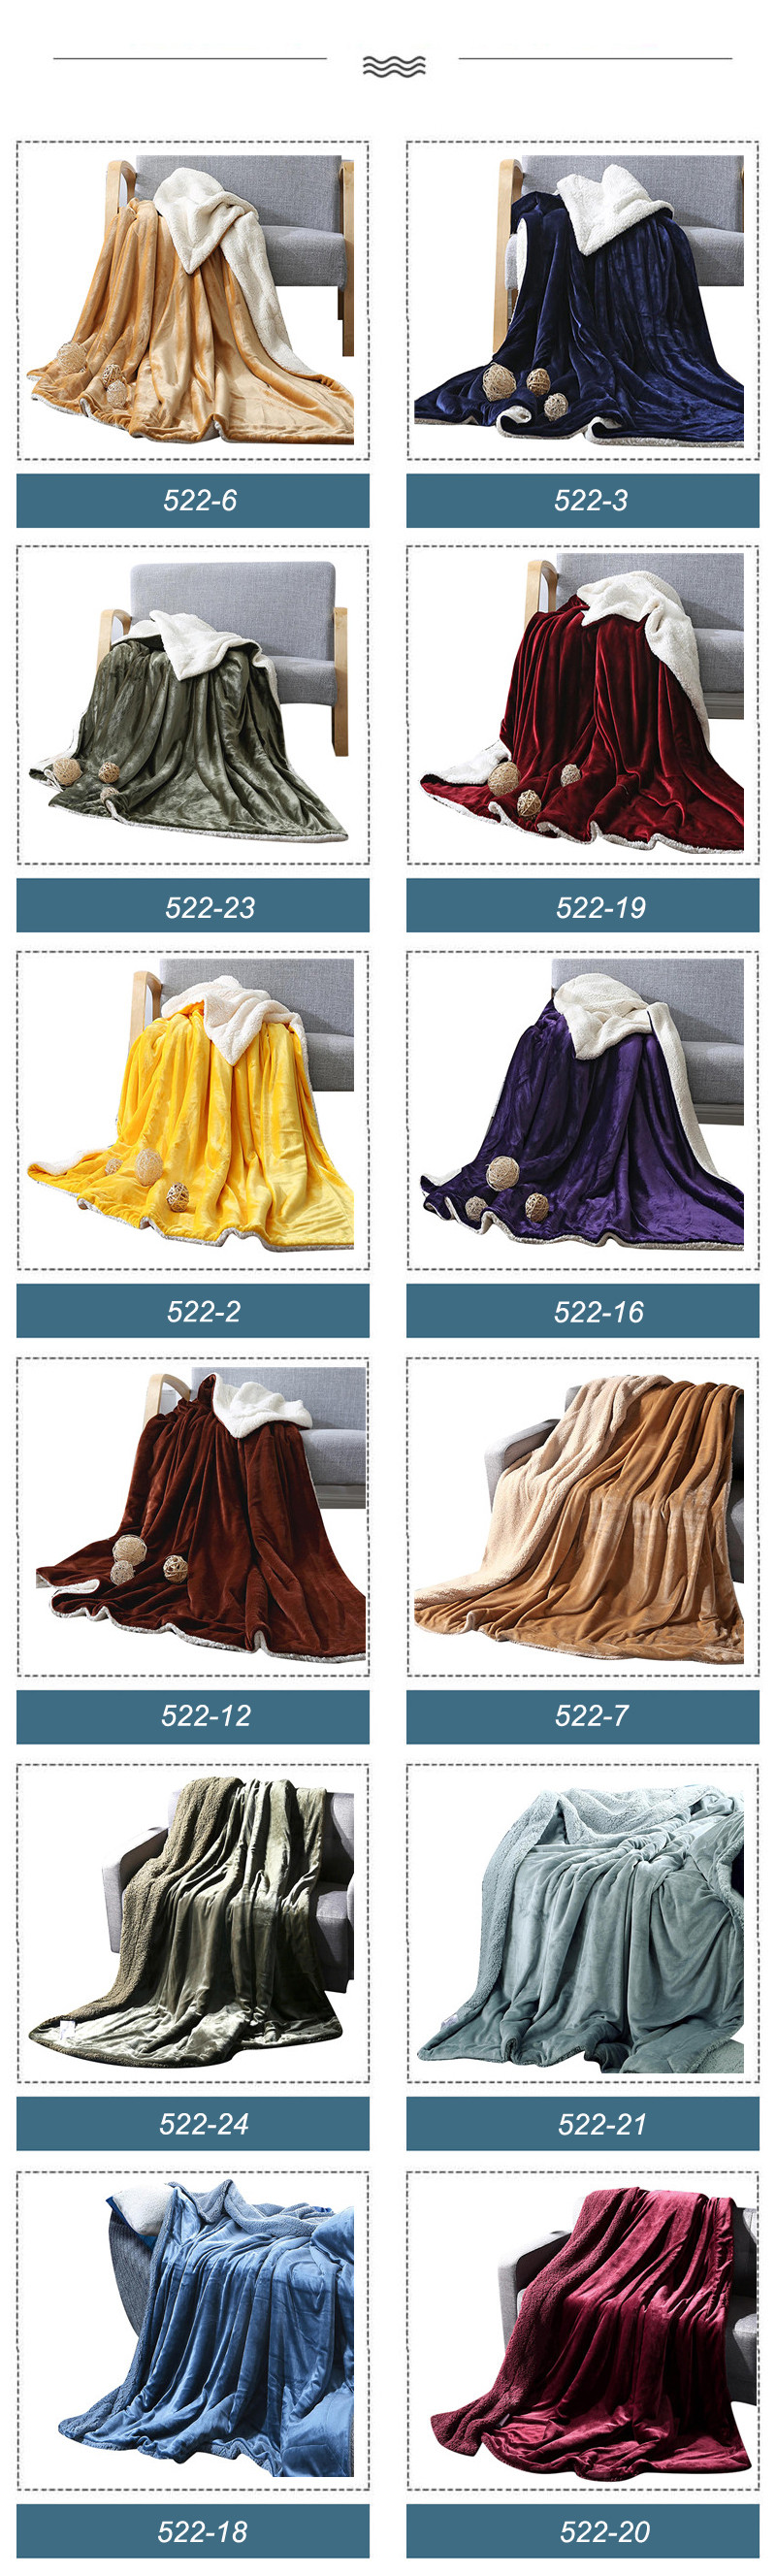 Multi Color Coral Blanket For King Bed